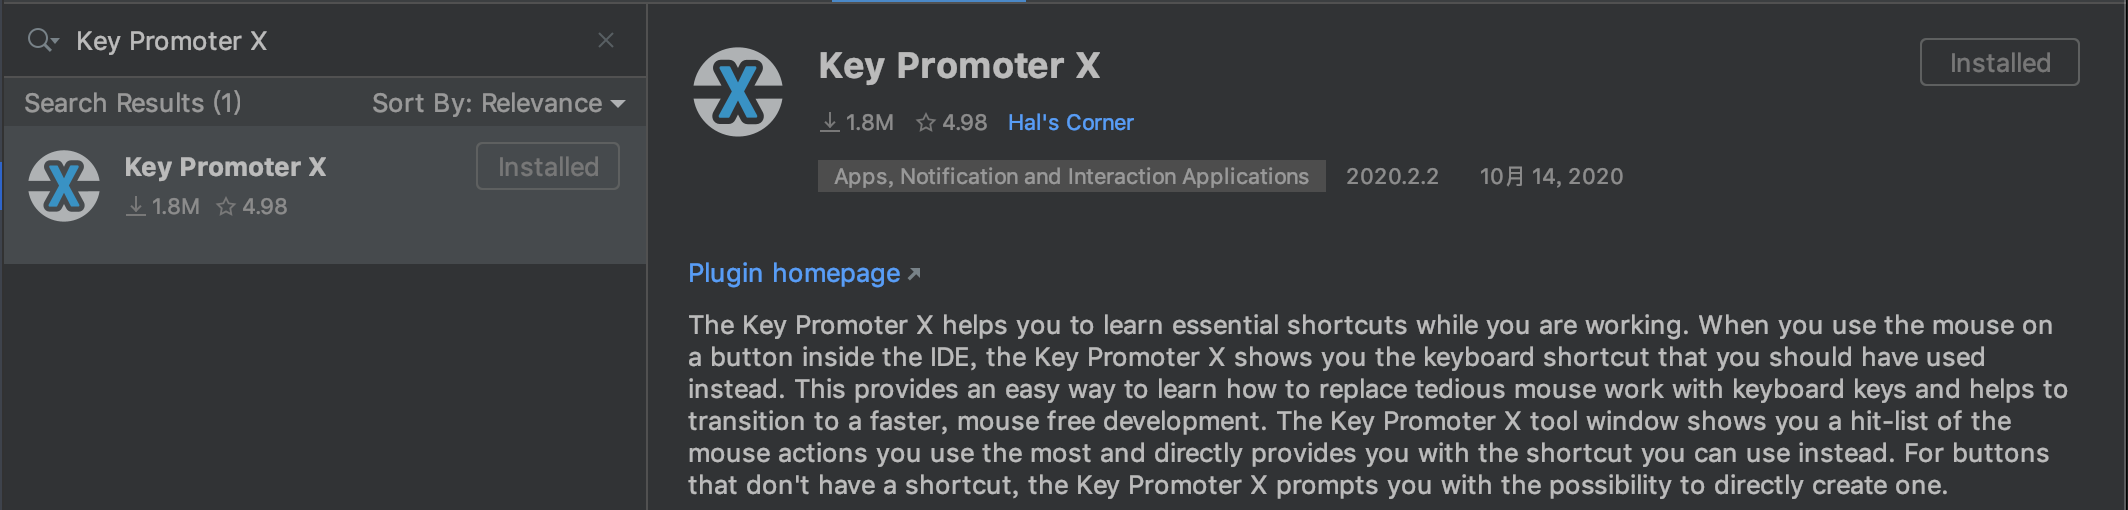 Key Promoter X